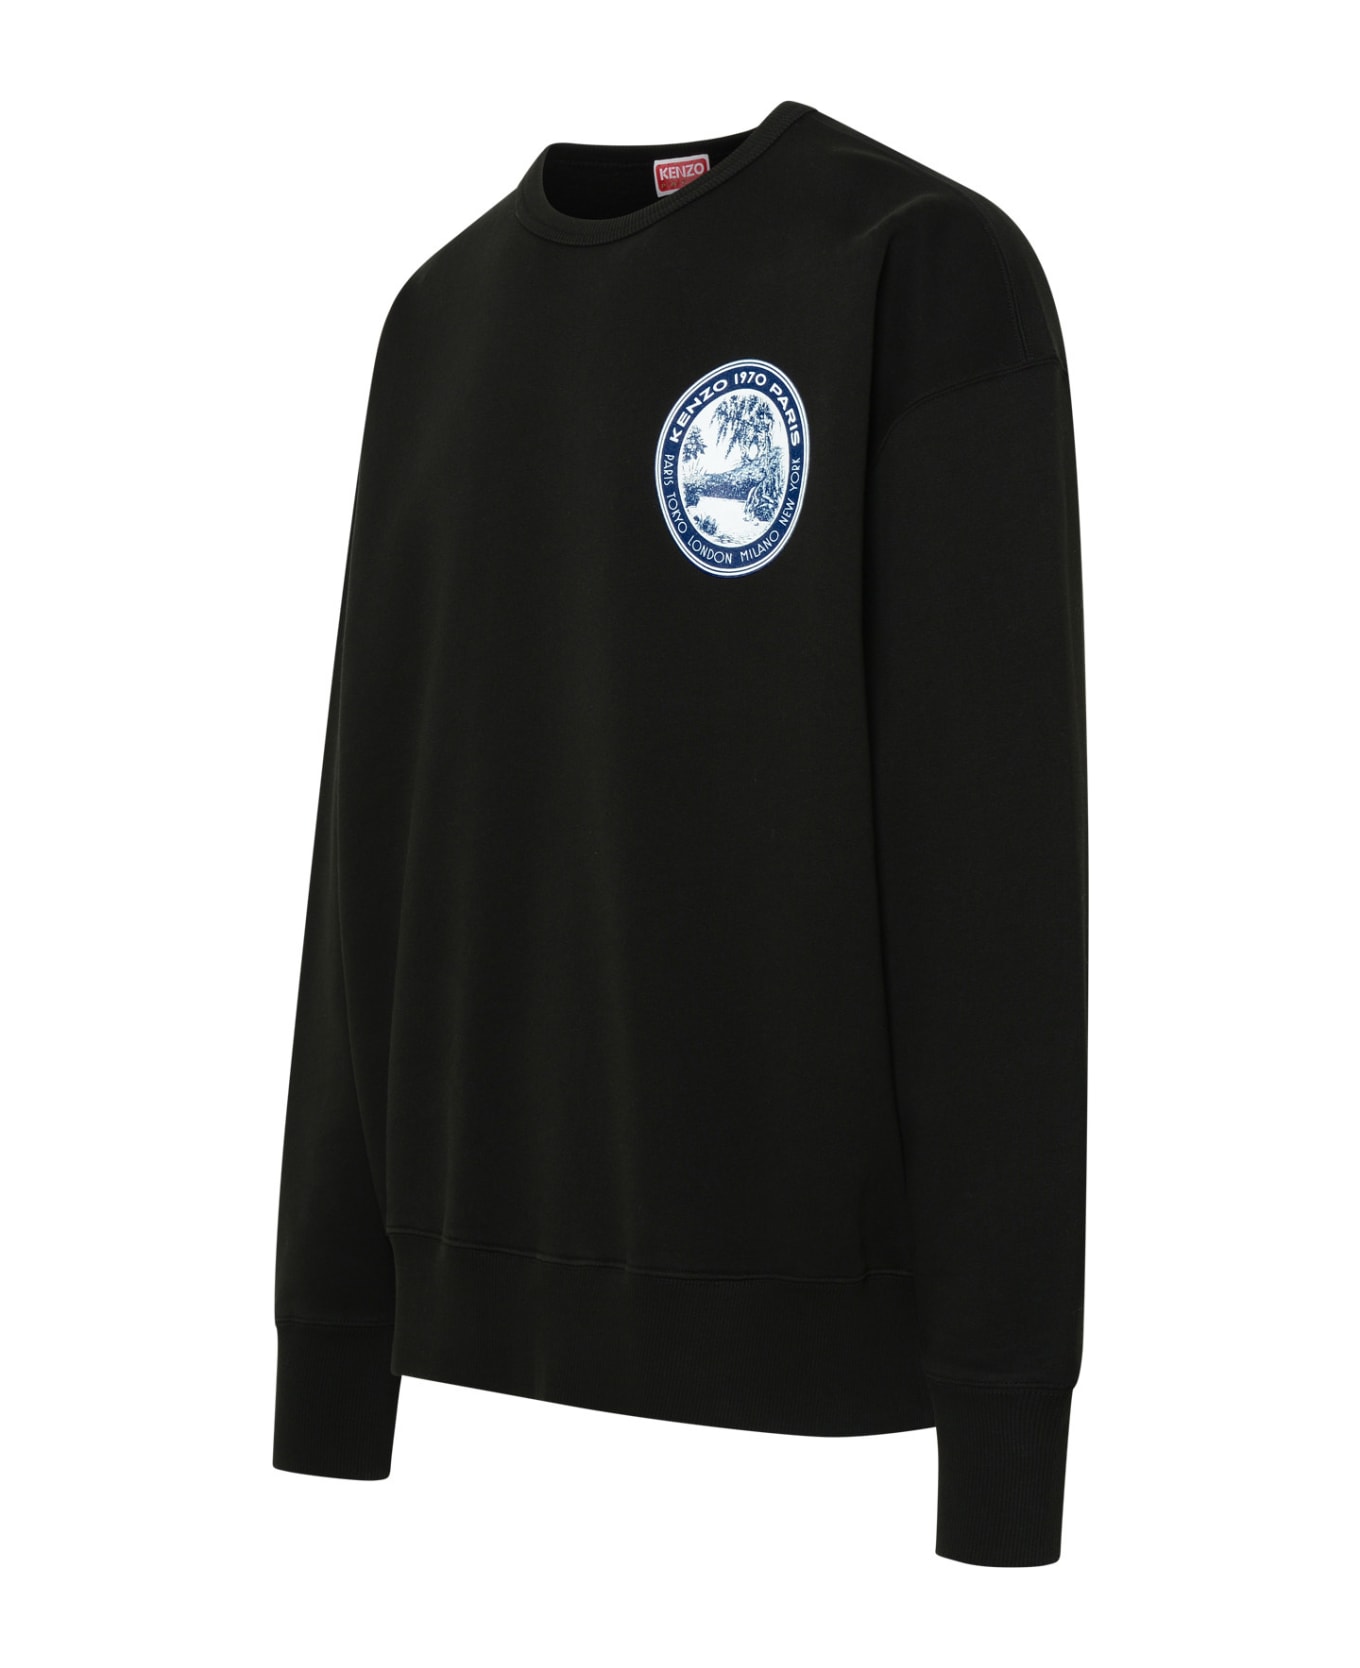 Kenzo Black Cotton Sweatshirt - Black